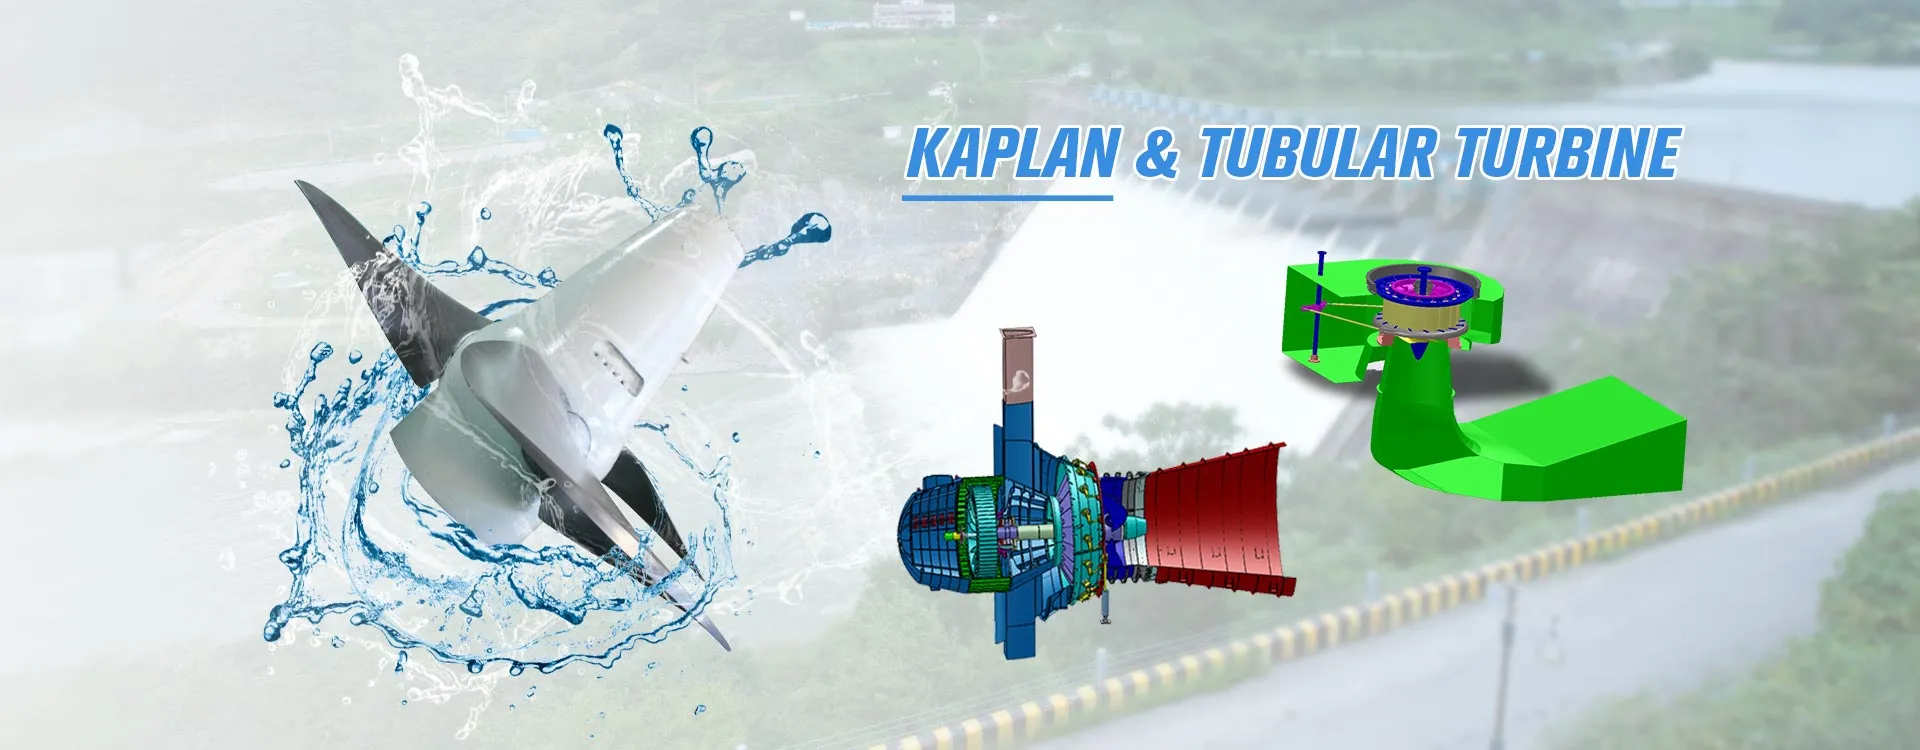 Turbine Kaplan et tubulaire